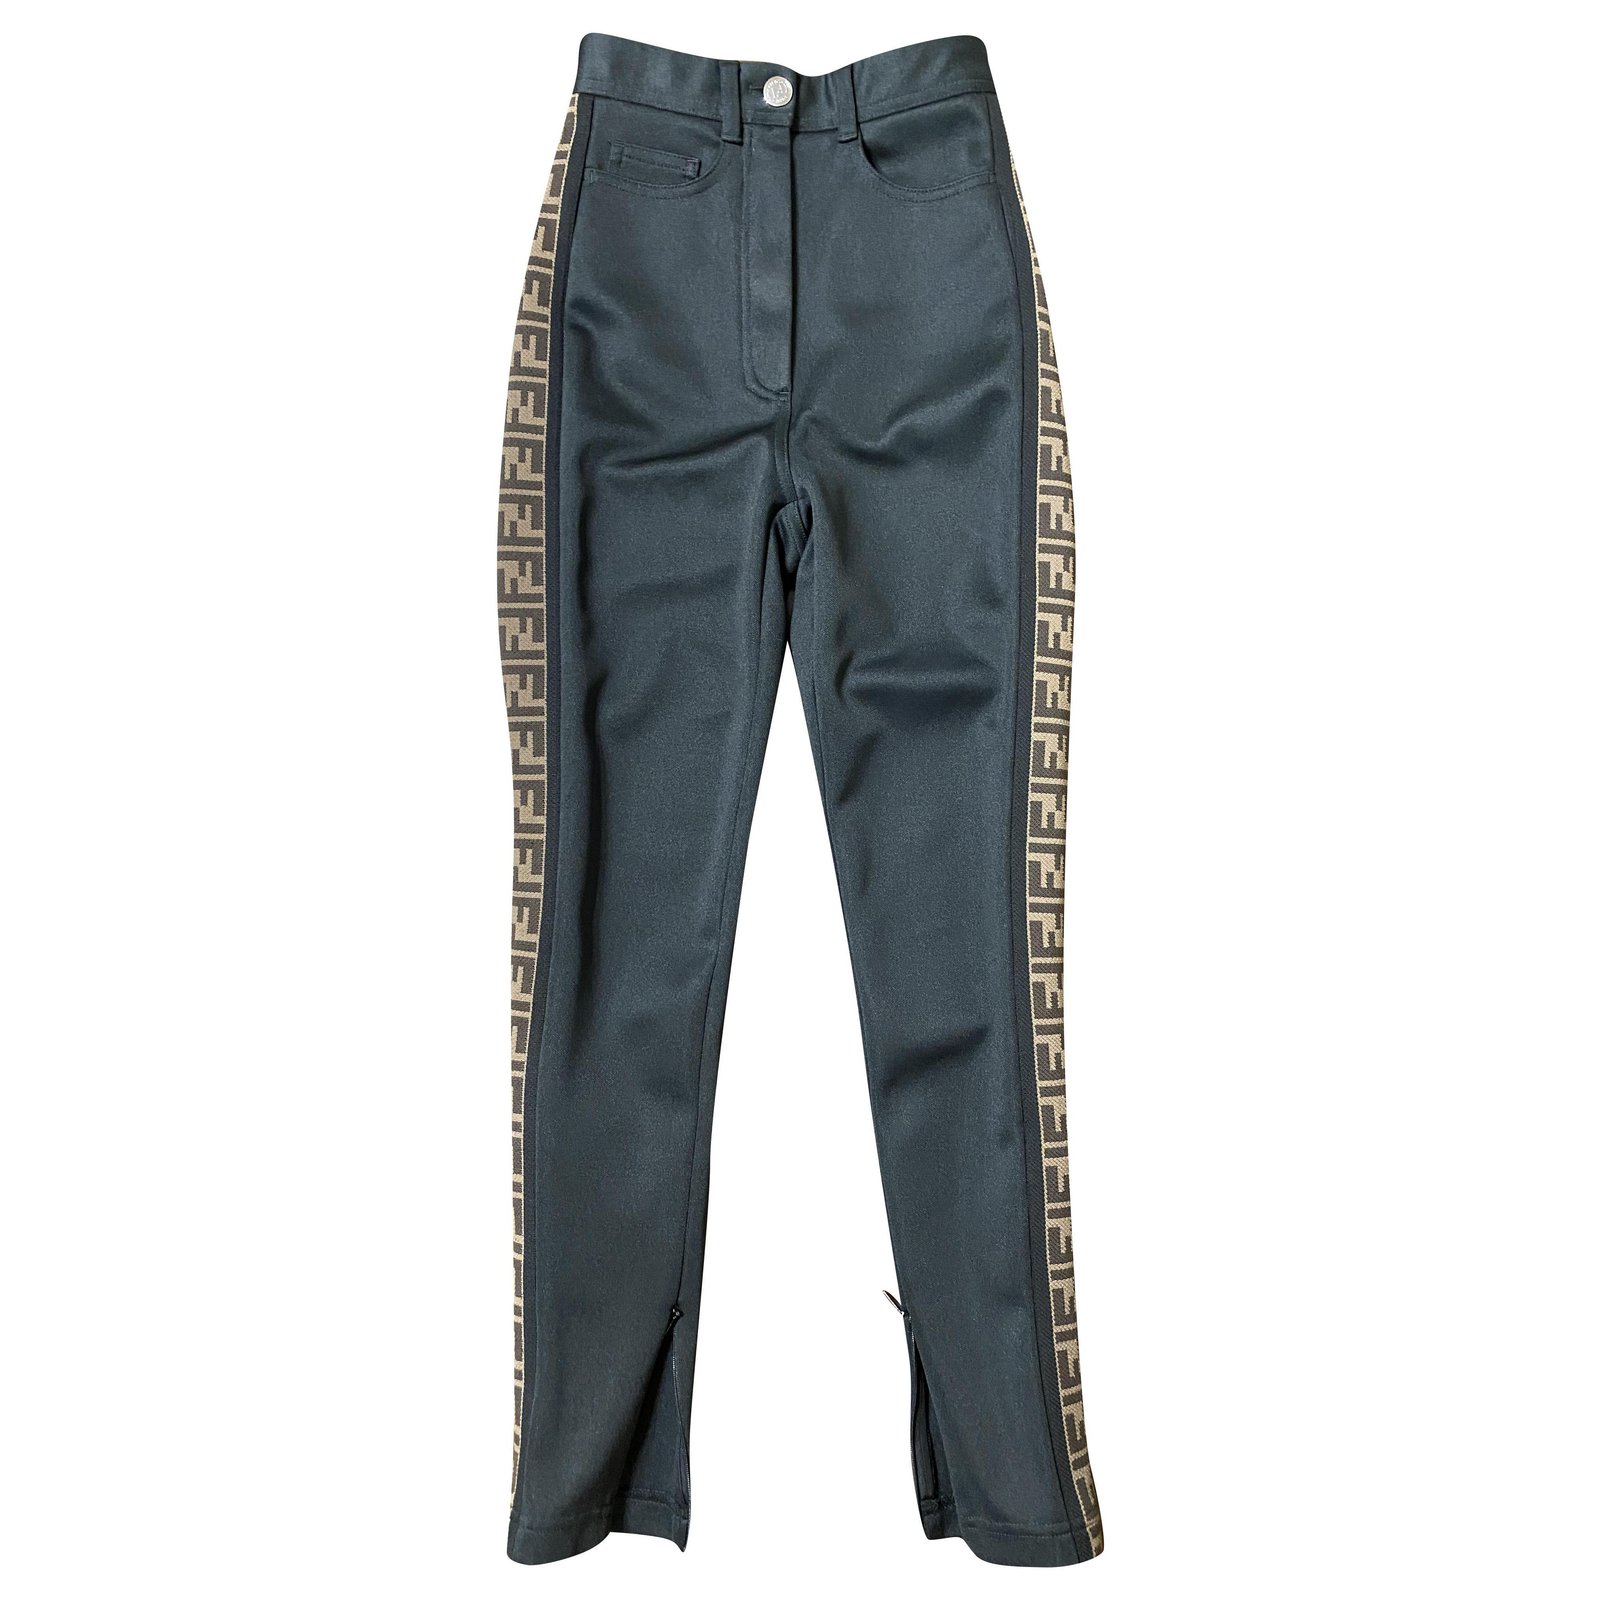 https://cdn1.jolicloset.com/imgr/full/2020/12/246556-1/fendi-brown-synthetic-pants-leggings.jpg